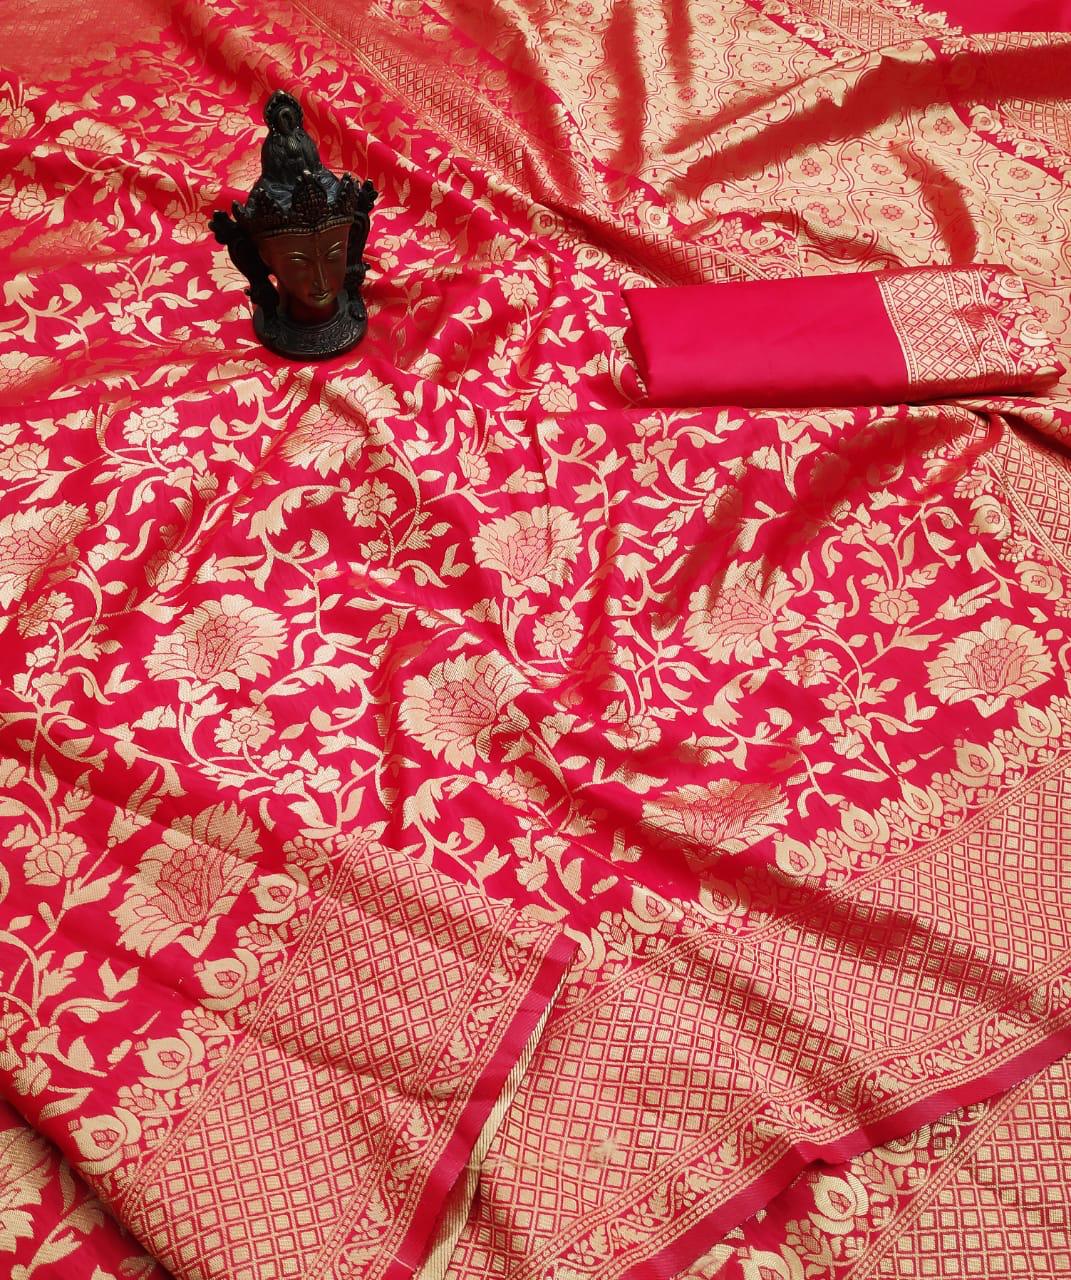 Red Colour Saree Sari With Stitched Blouse Indian Designer Saree Ready to Wear Indian Wedding Wear Traditional Bridal Saree Partywear Saree